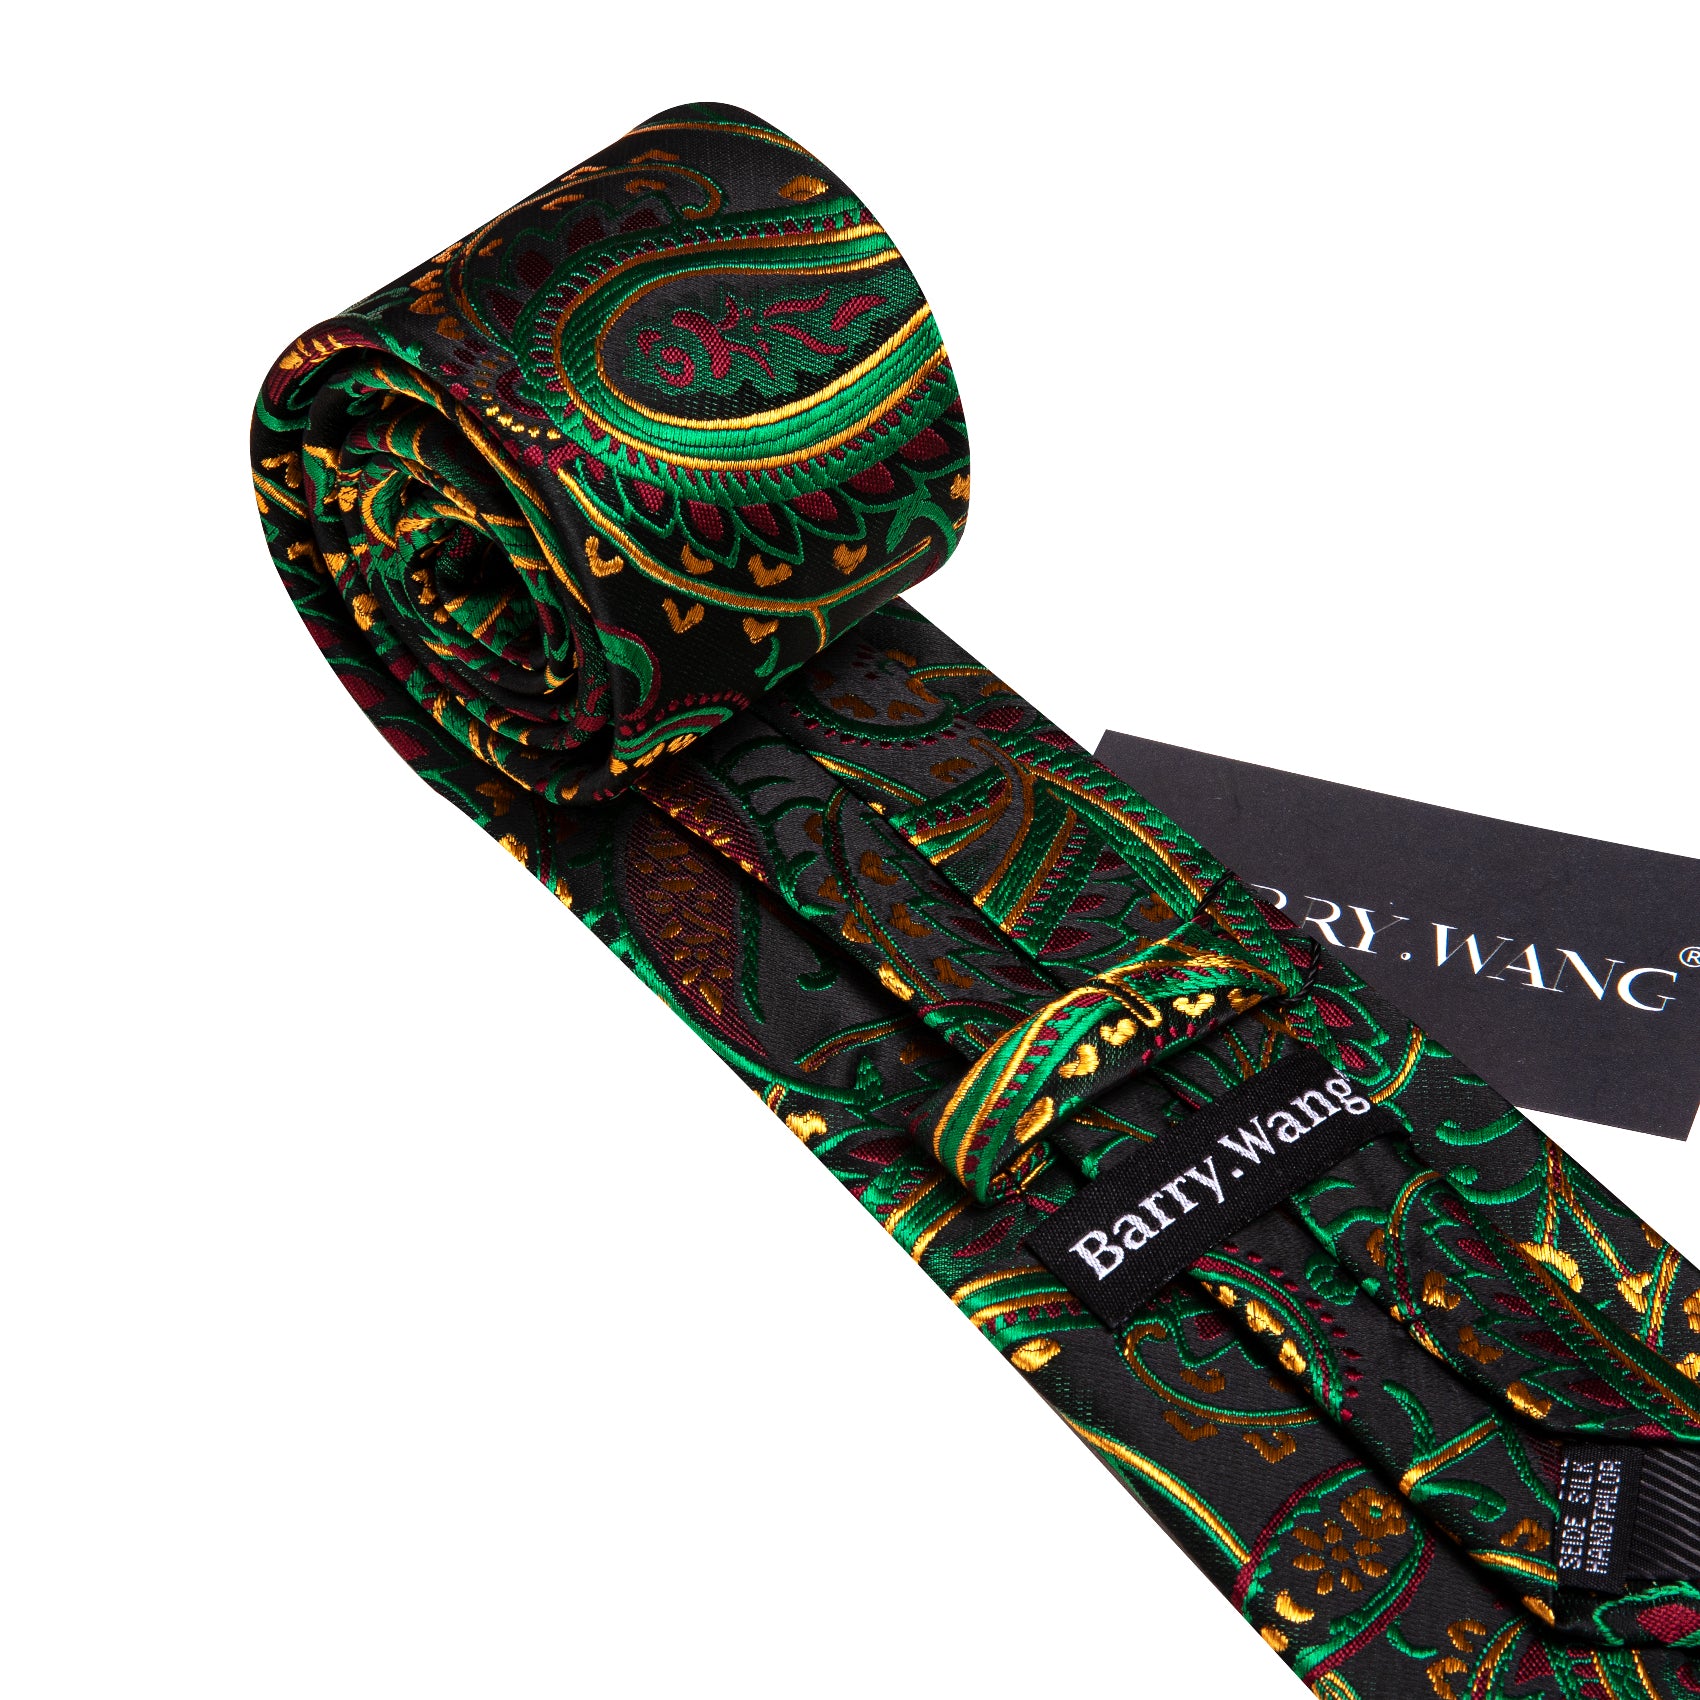  Black TIe Green Yellow Paisley Silk Tie Handkerchief Cufflinks Set